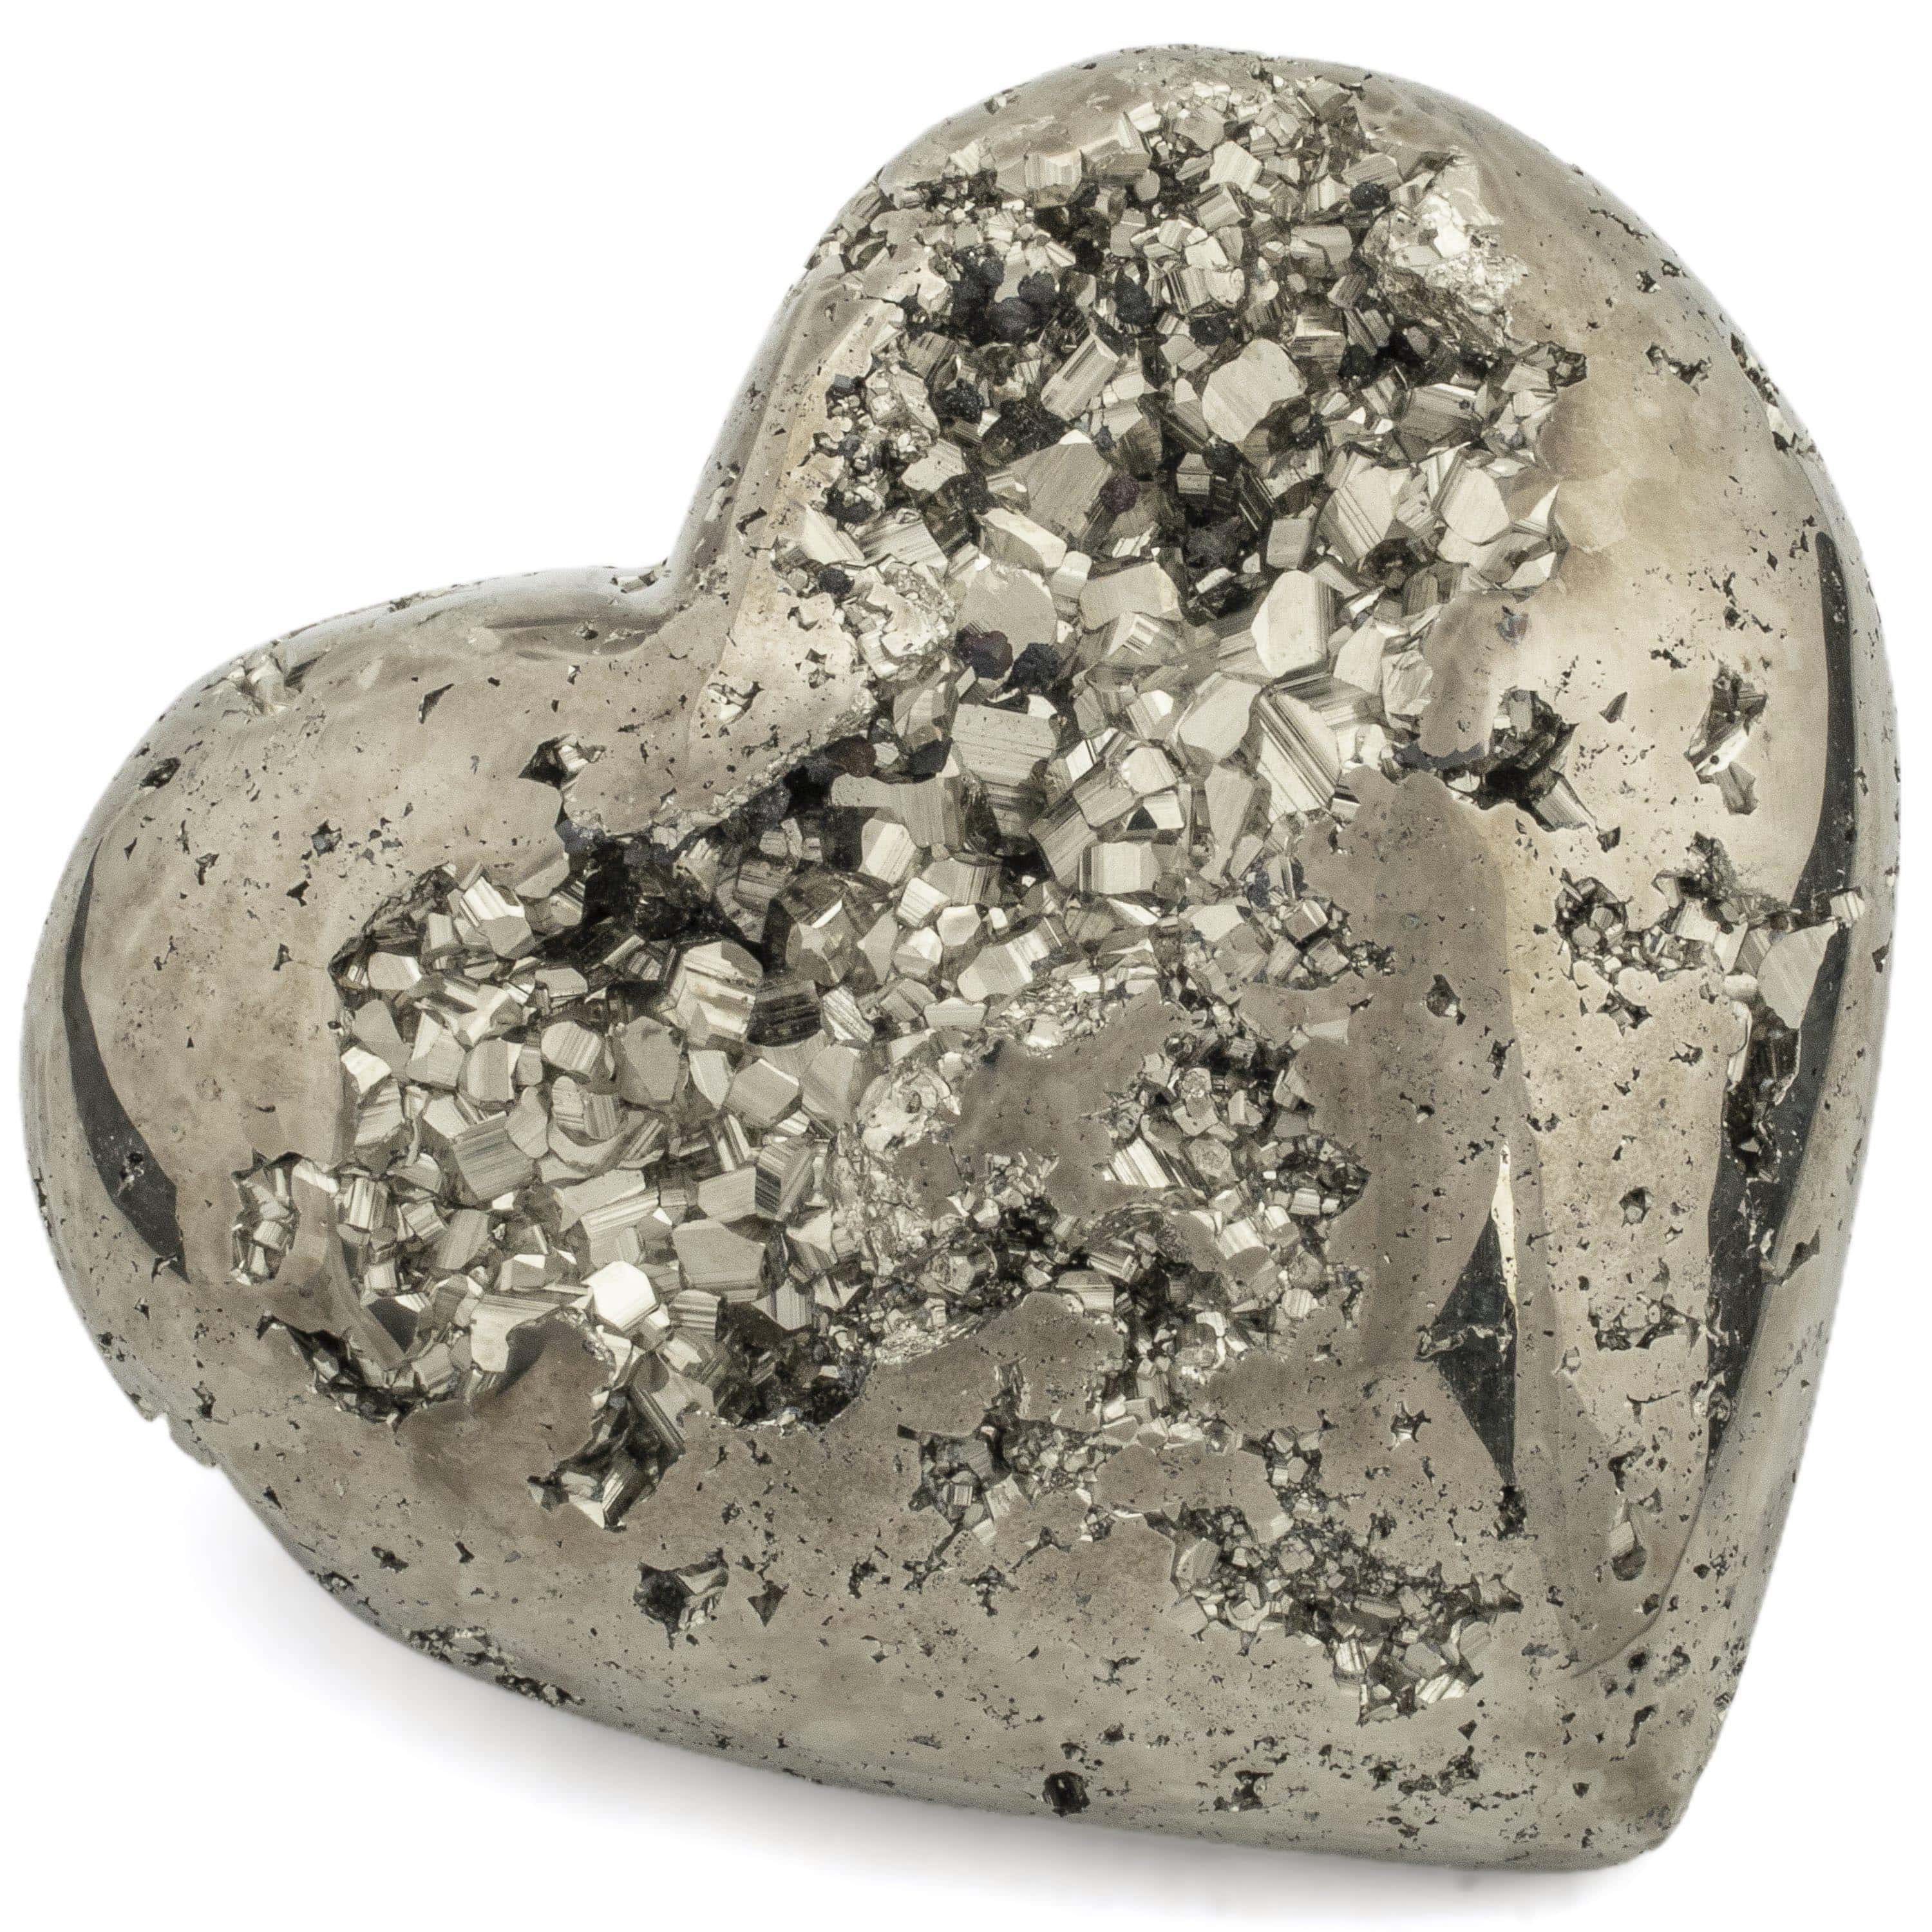 Kalifano Pyrite Pyrite Heart Carving 4.5" / 1,110 grams GH1200-PC.003